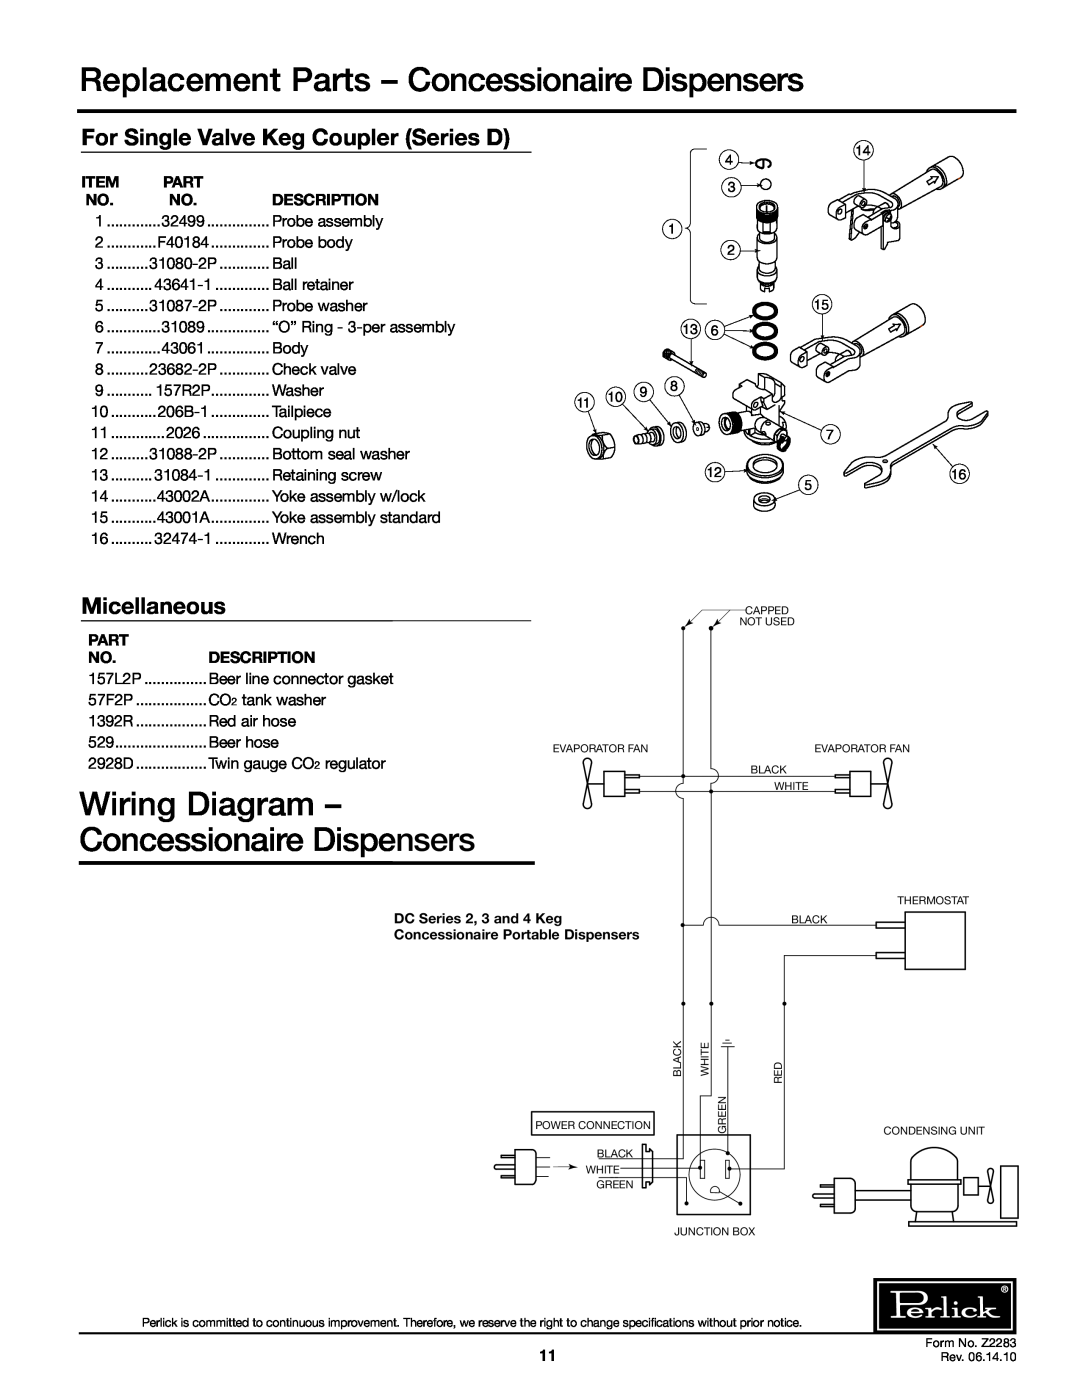 Perlick DC72S, DC96S Wiring Diagram Concessionaire Dispensers, For Single Valve Keg Coupler Series D, Micellaneous, Part 